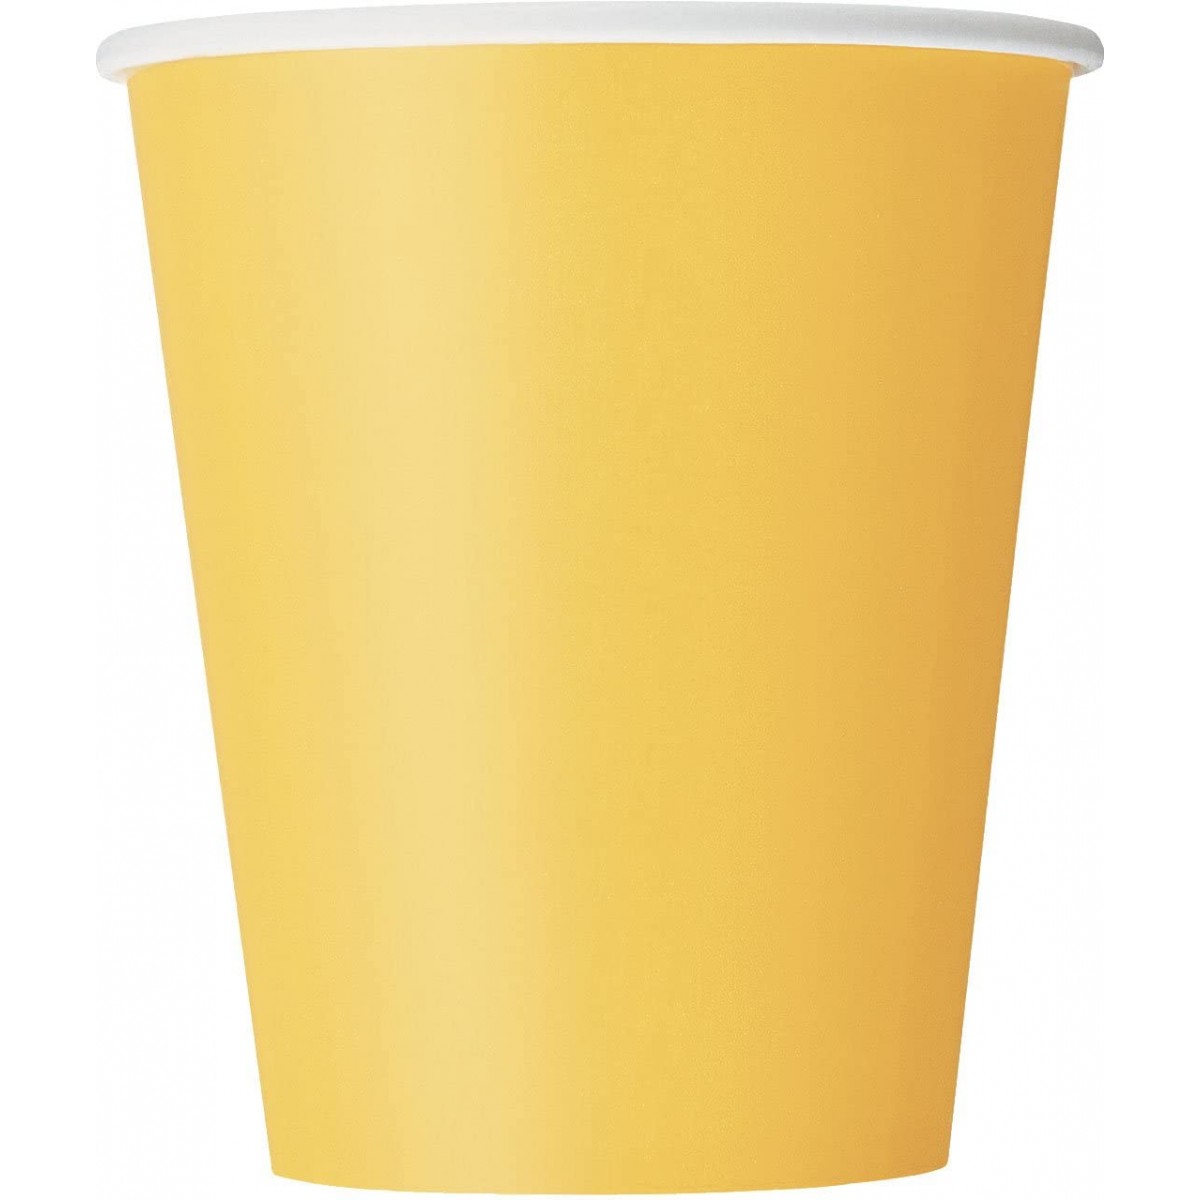 Set di 14 Bicchieri gialli in cartoncino, da 270 ml, per feste